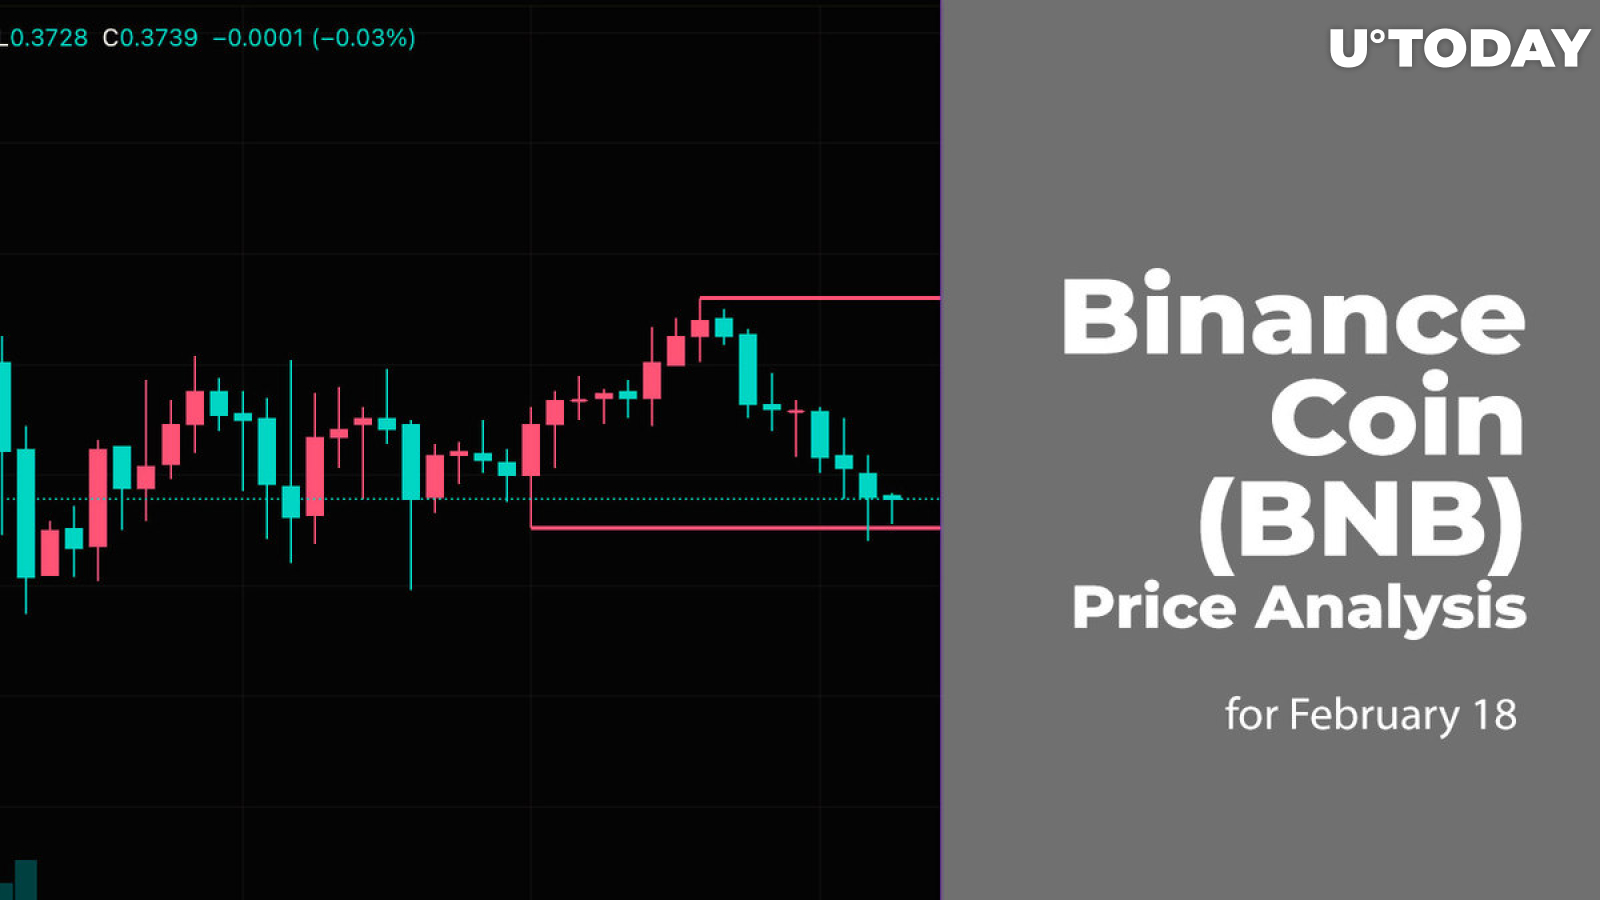 Binance Coin (BNB) Price Analysis for February 18